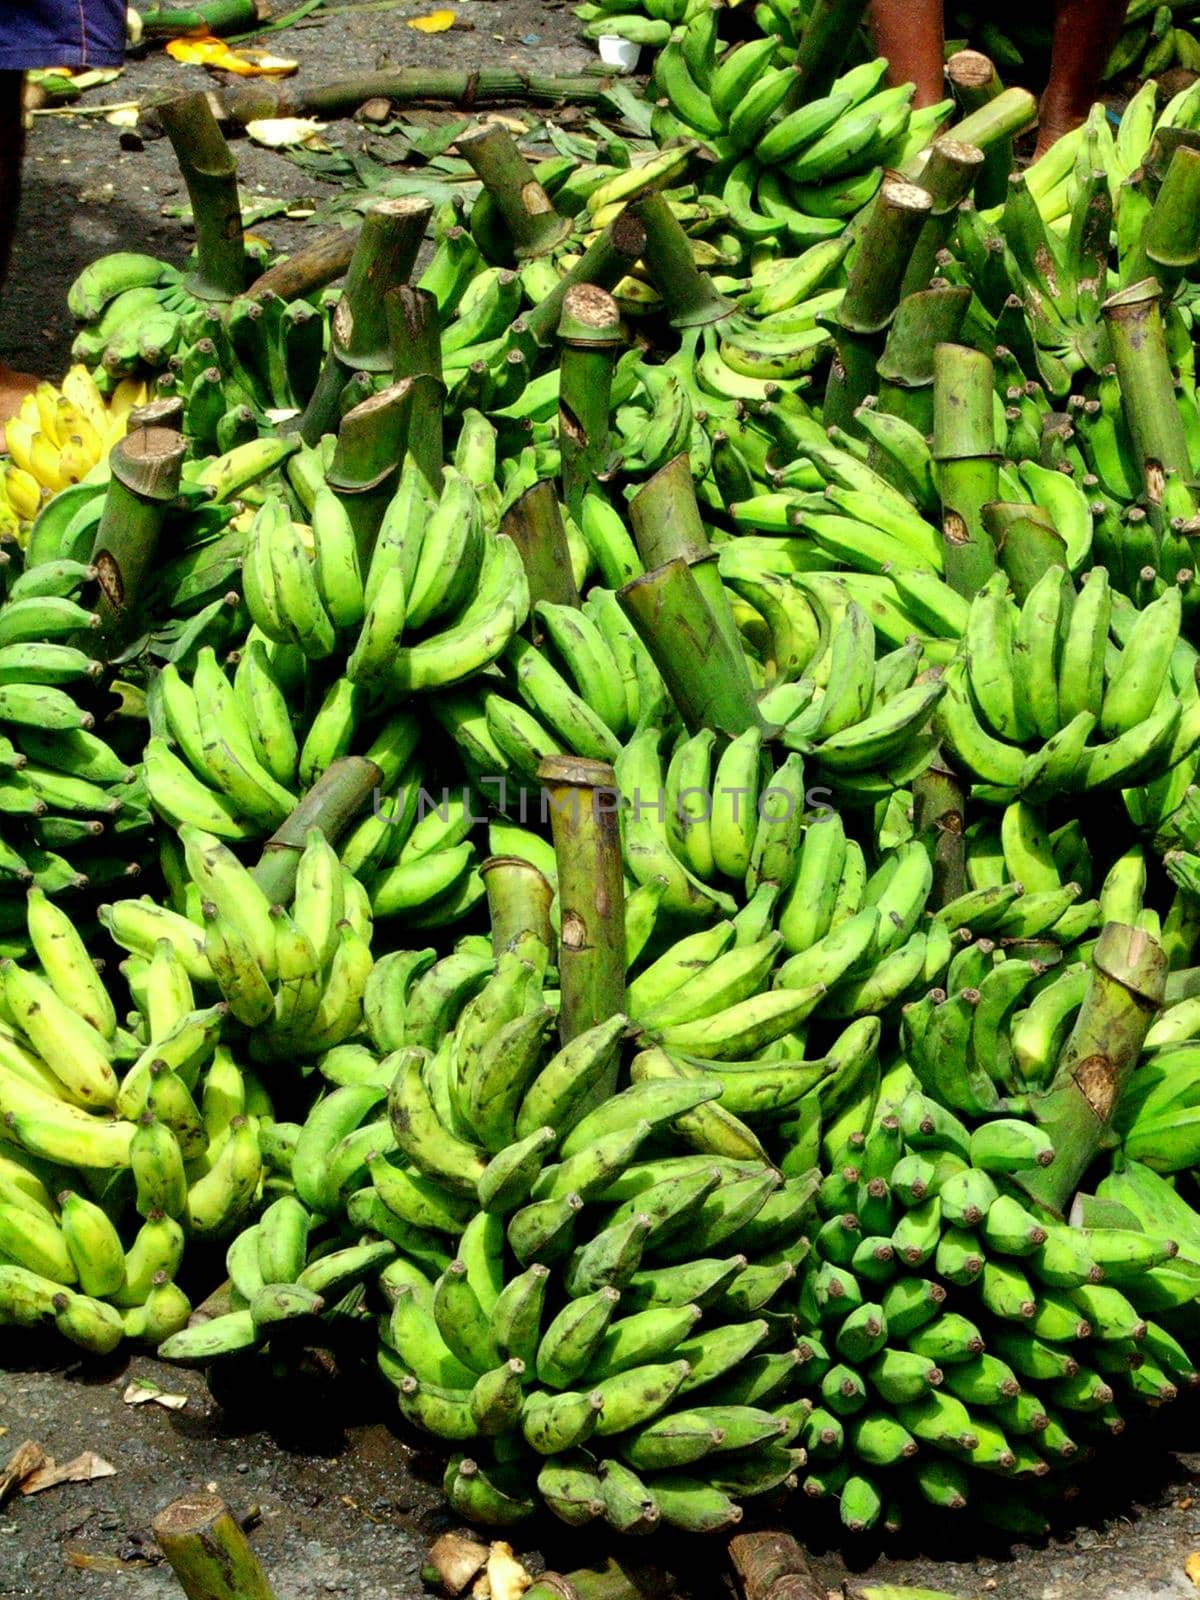  bananas for sale at a free market  by joasouza